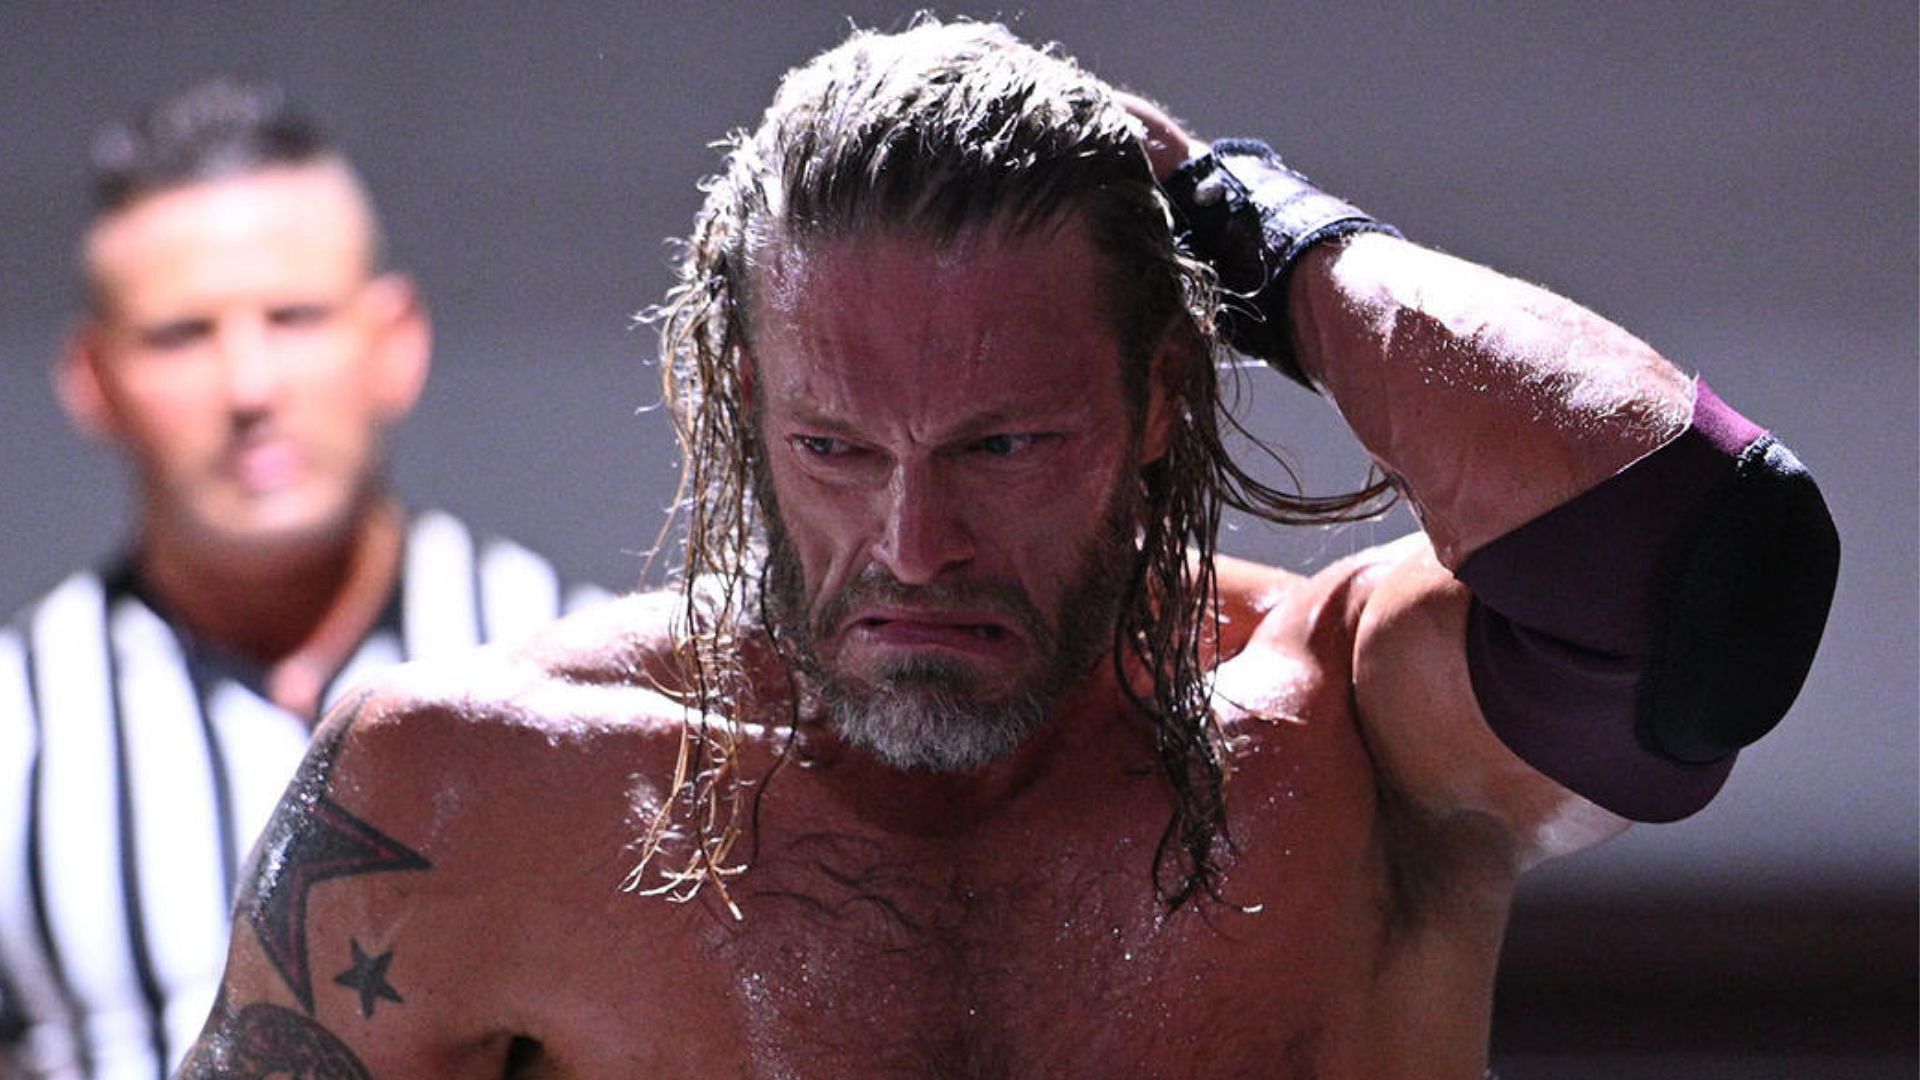 Edge at WrestleMania 36 against Randy Orton!